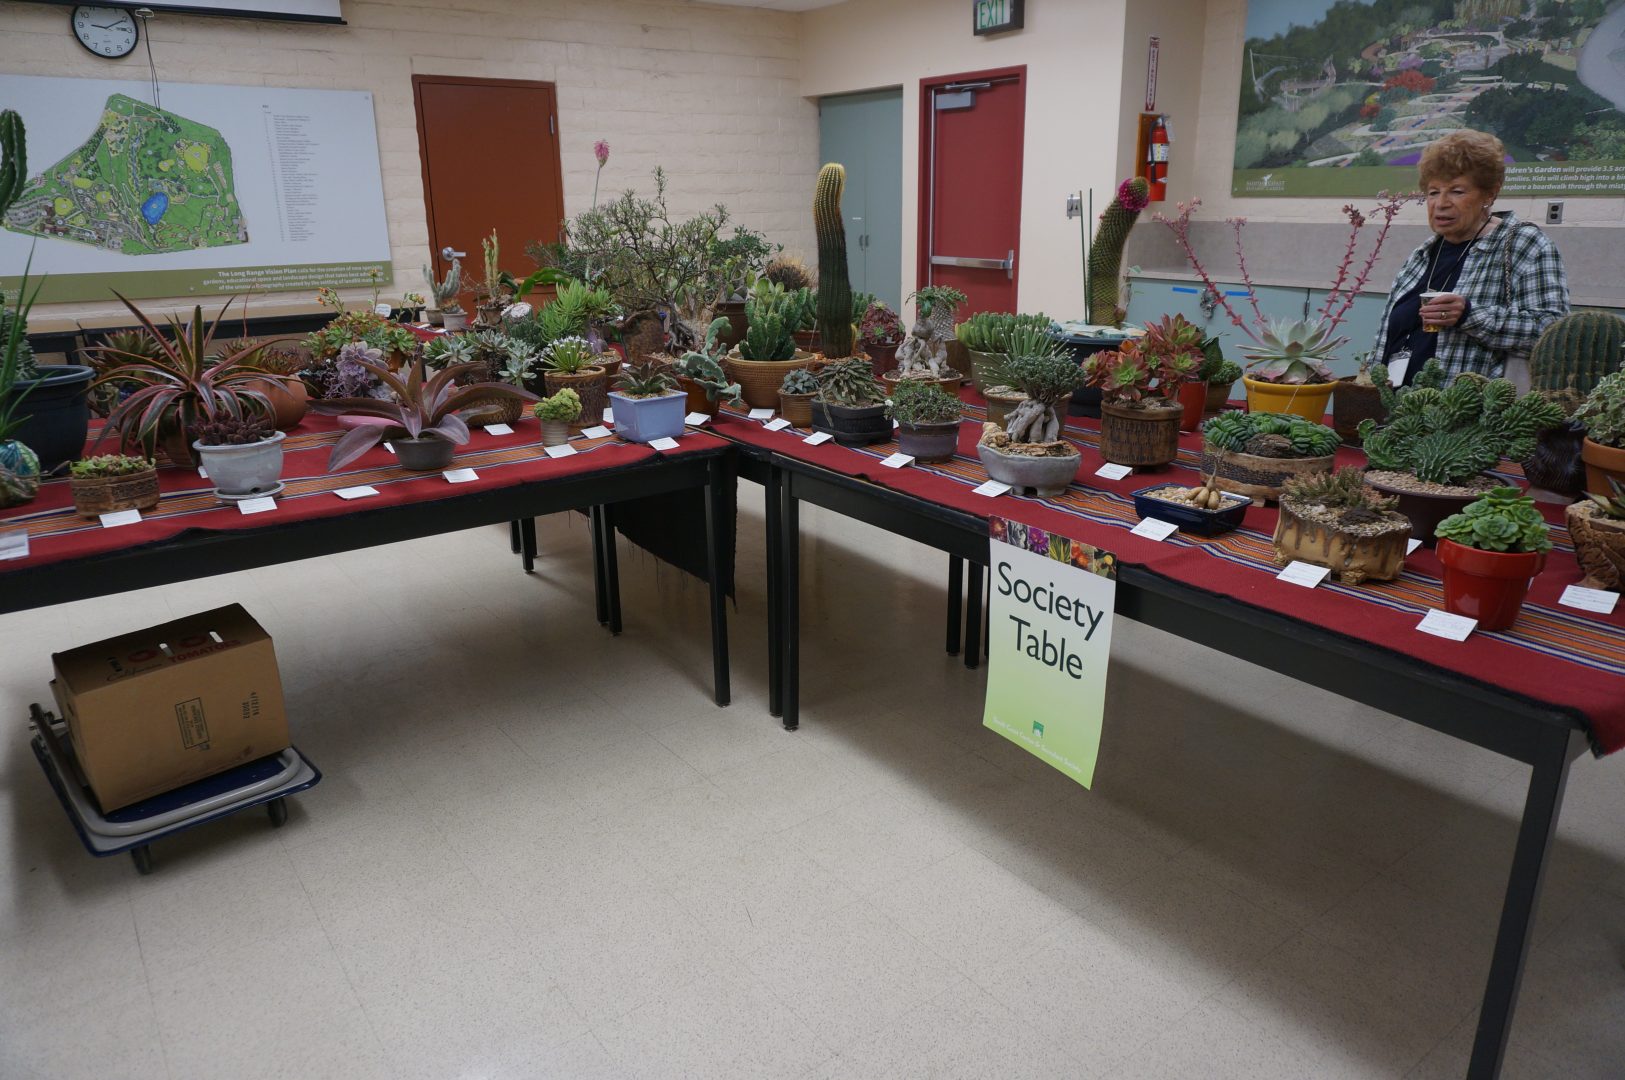 Society Club member's display plants